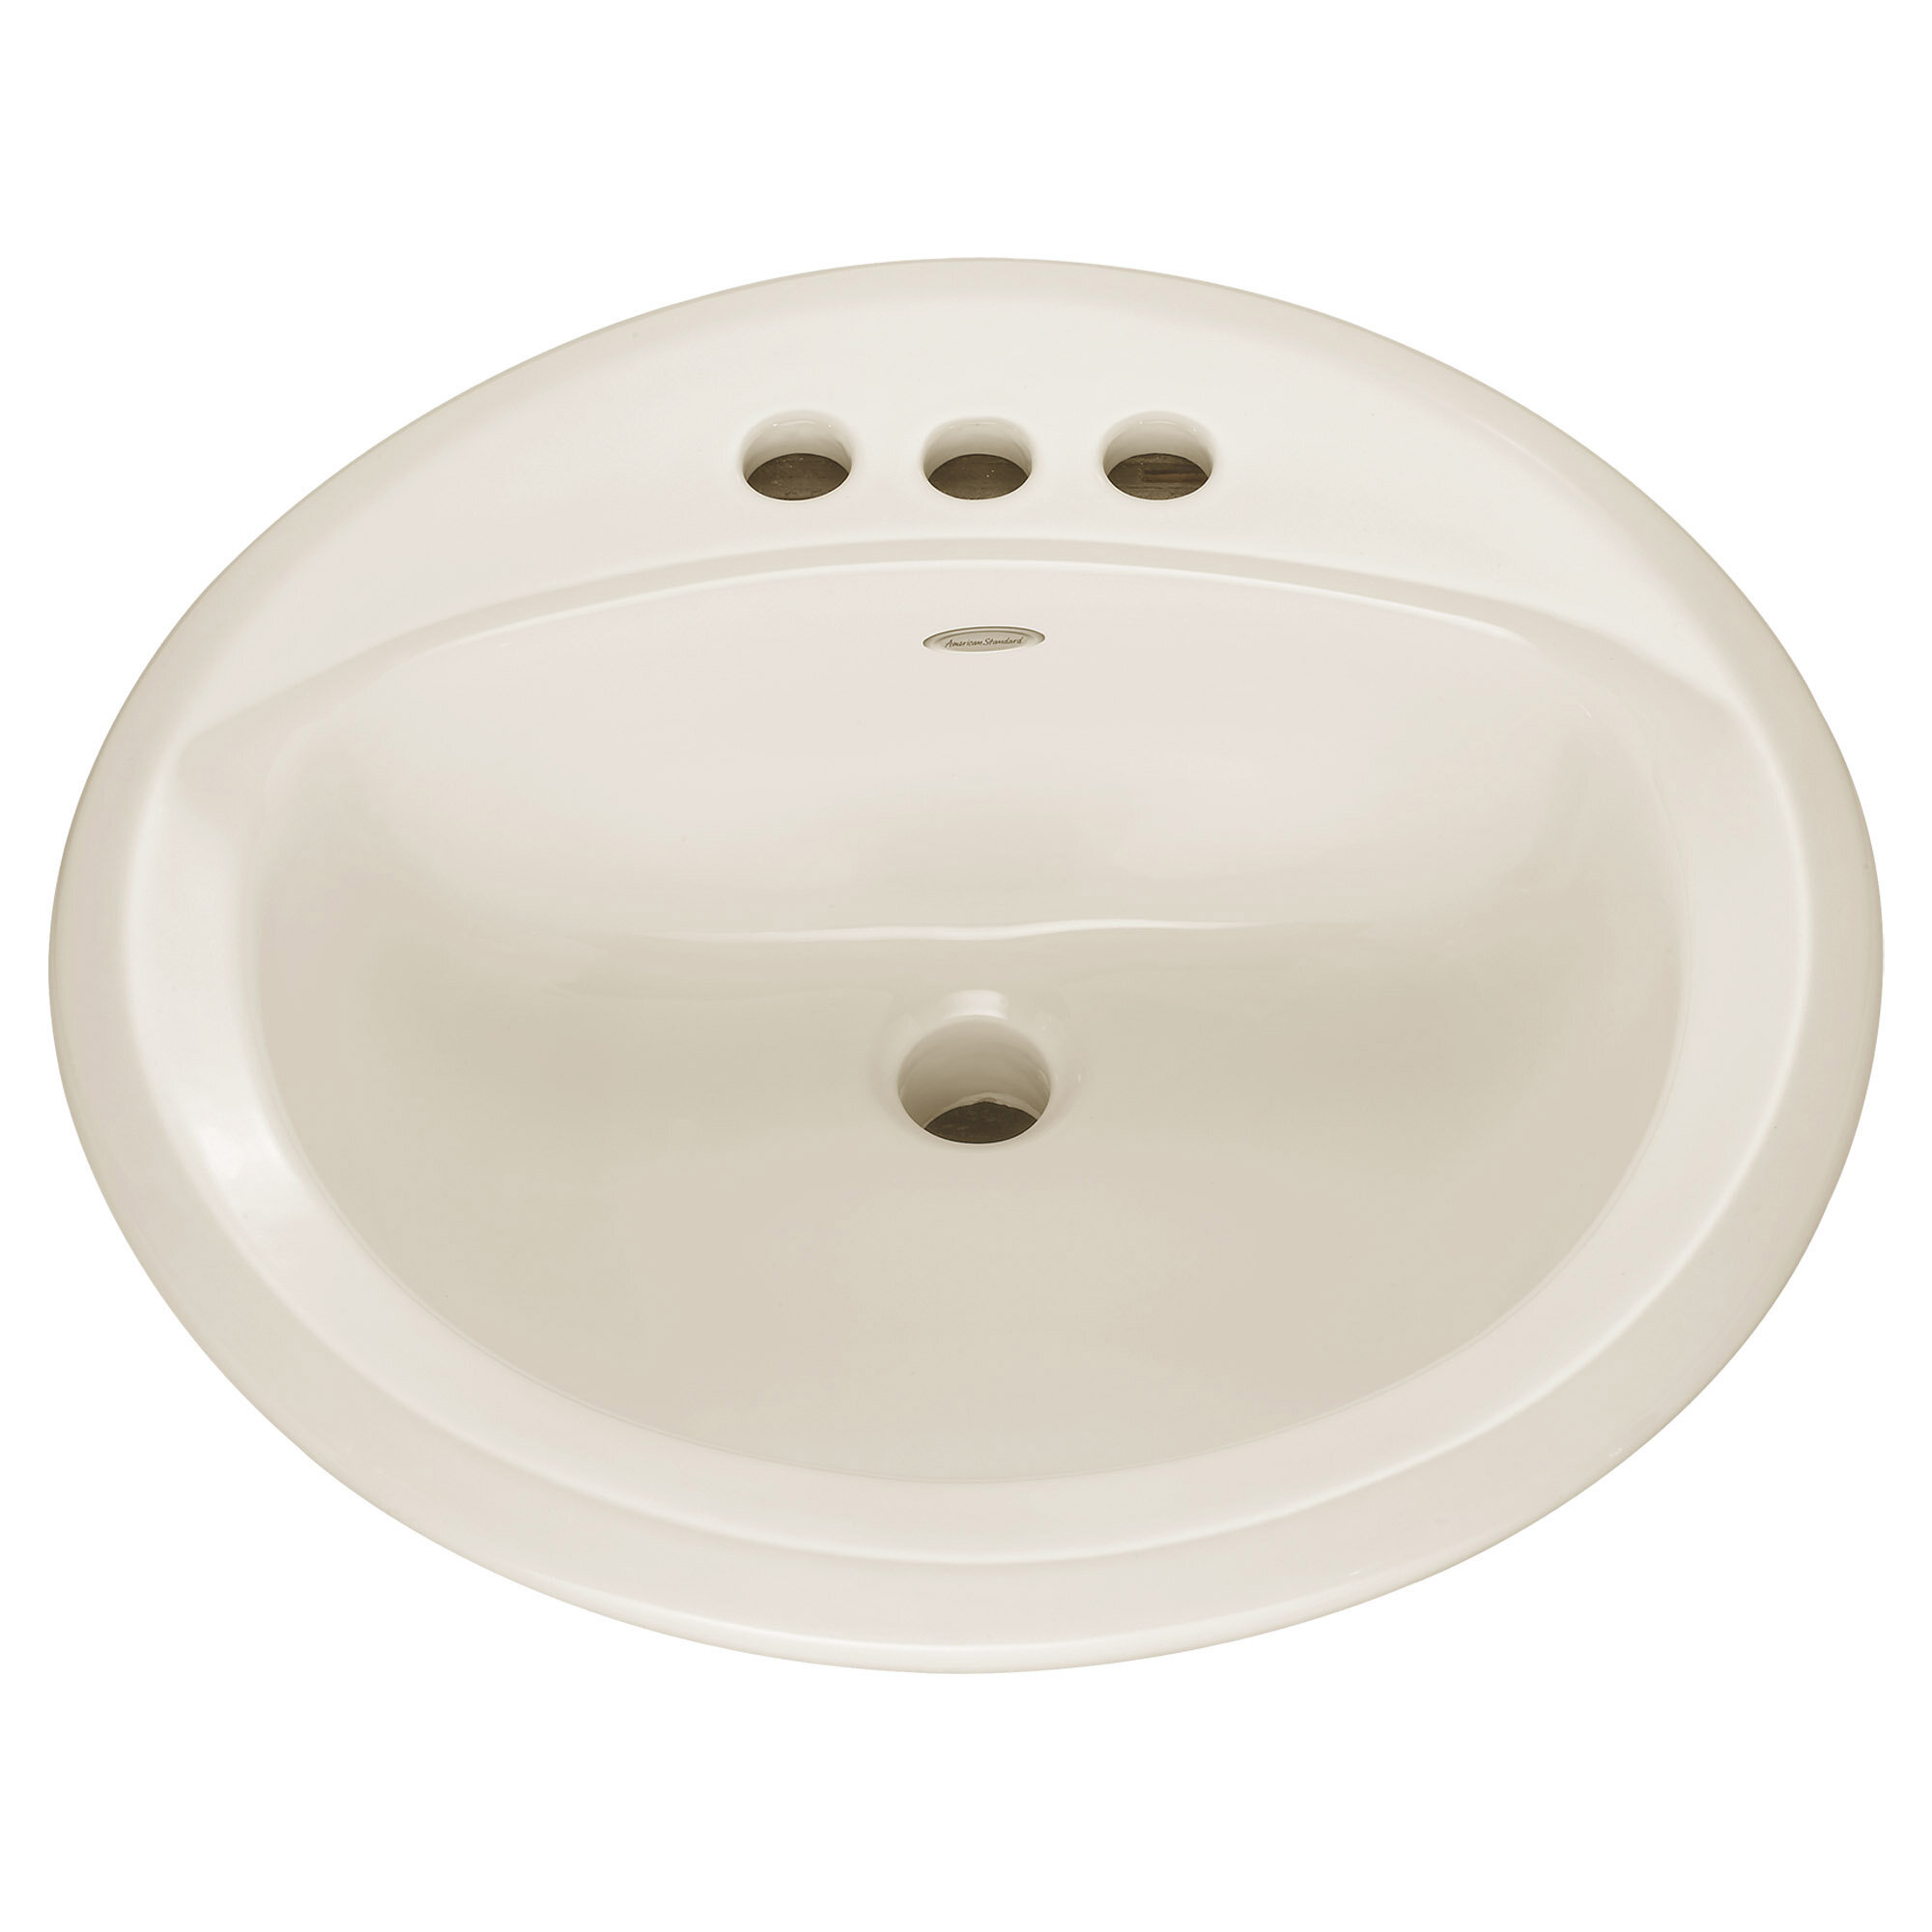 Rondalyn Ceramic Circular Drop In Bathroom Sink With Overflow 